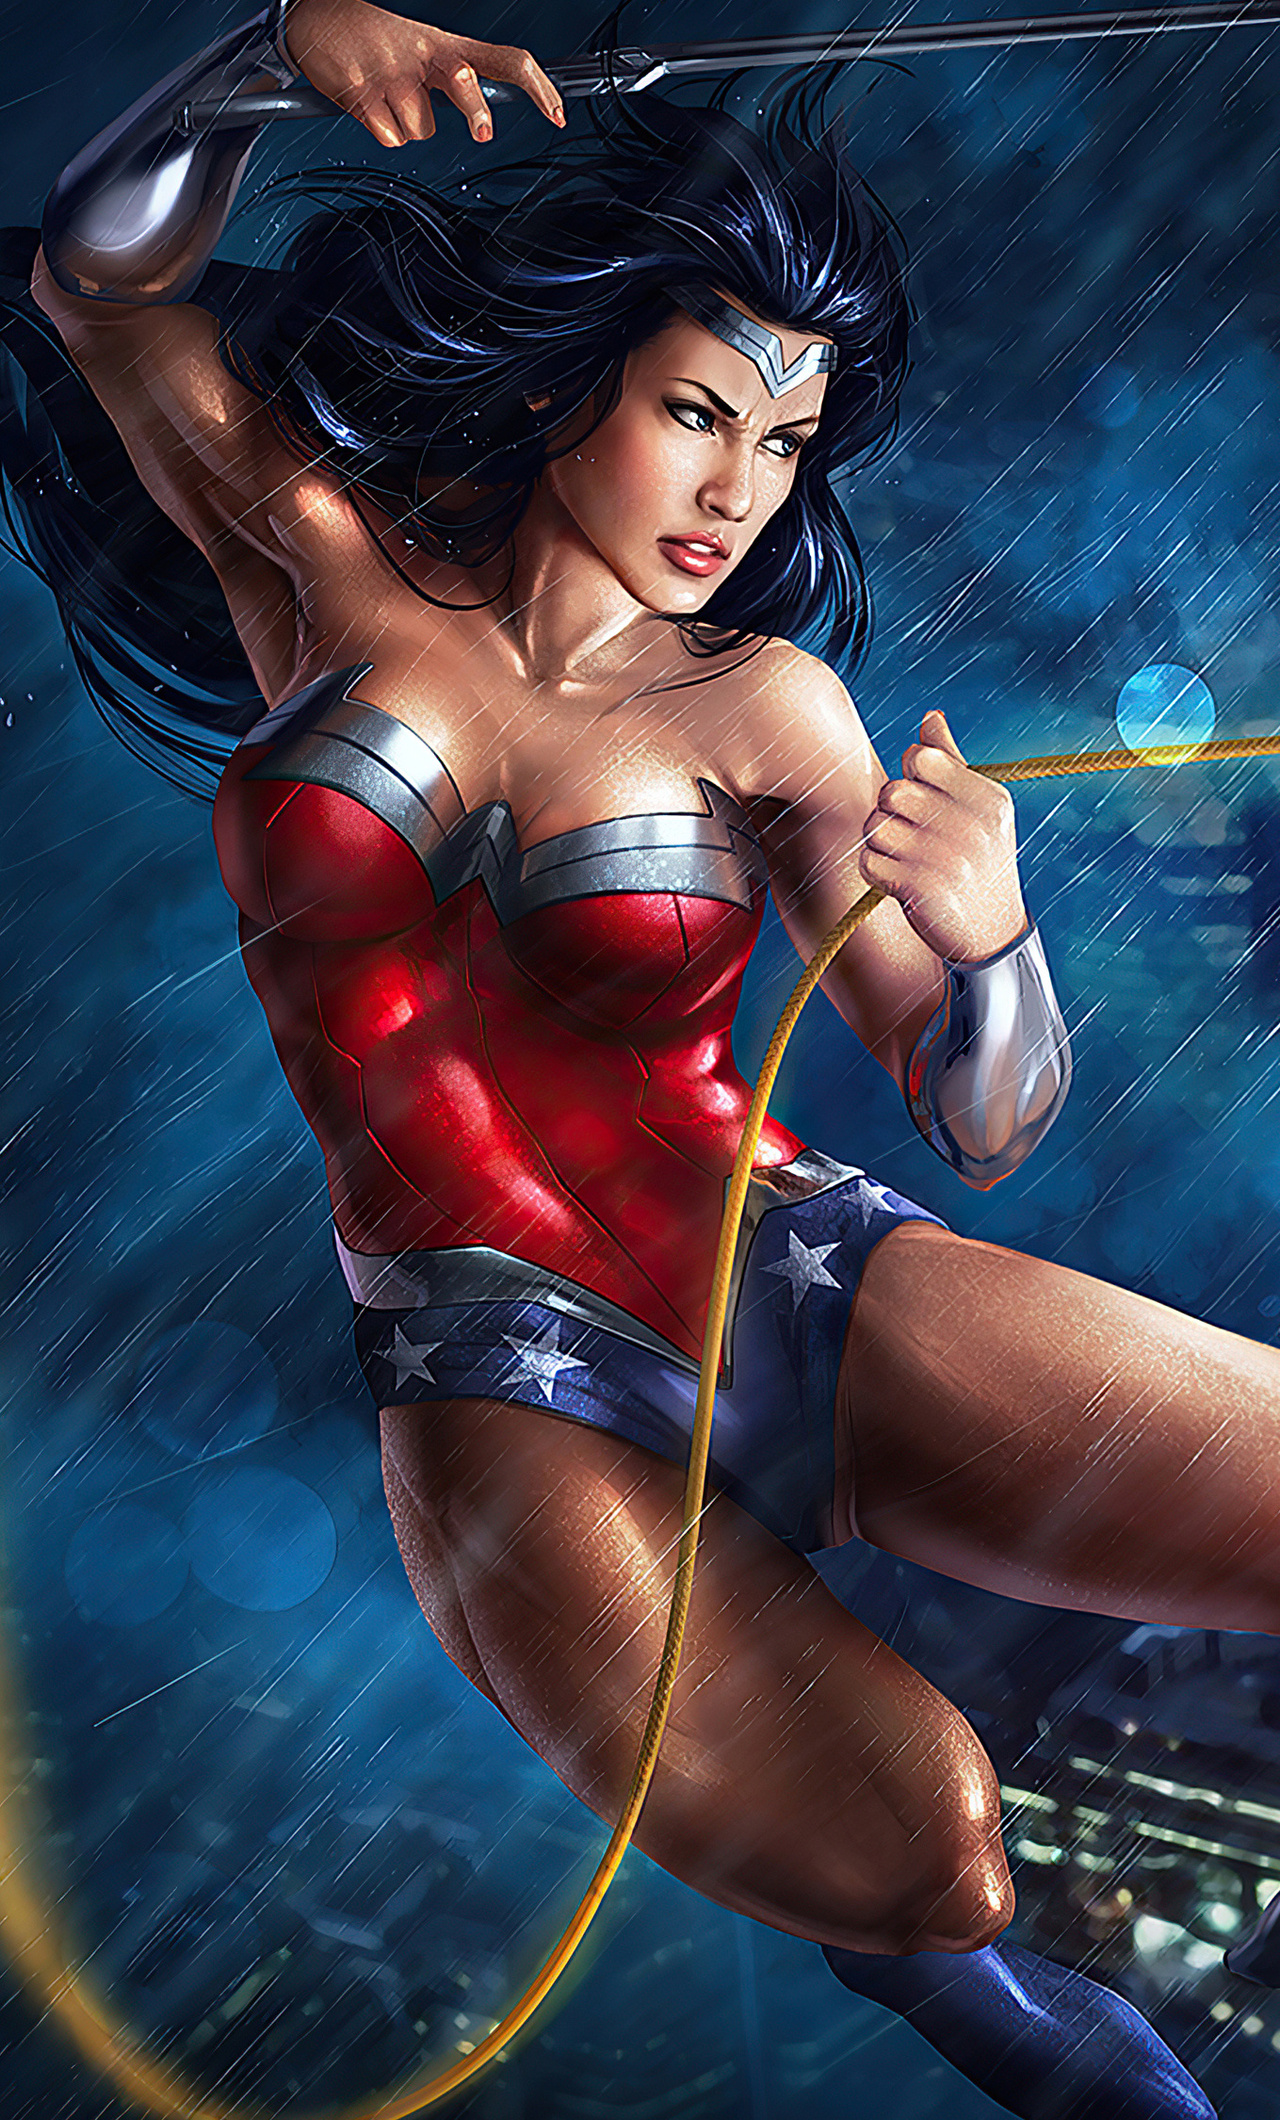 Wonder Woman Vs Storm In 1280x2120 Resolution. wonder-woman-vs-stor...